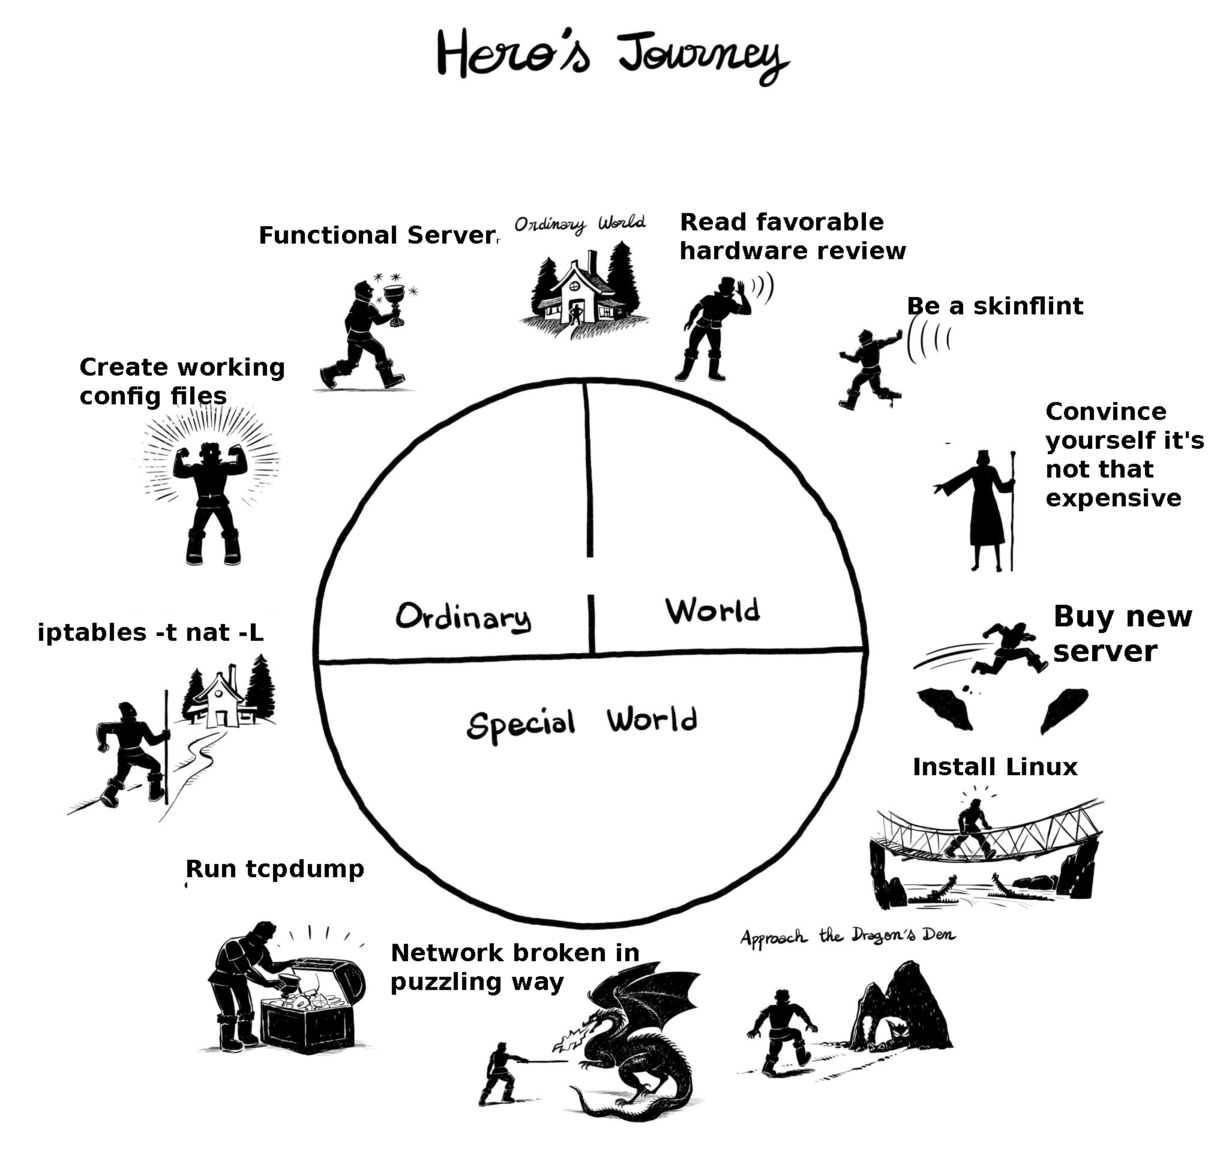 Hero’s Journey Diagram